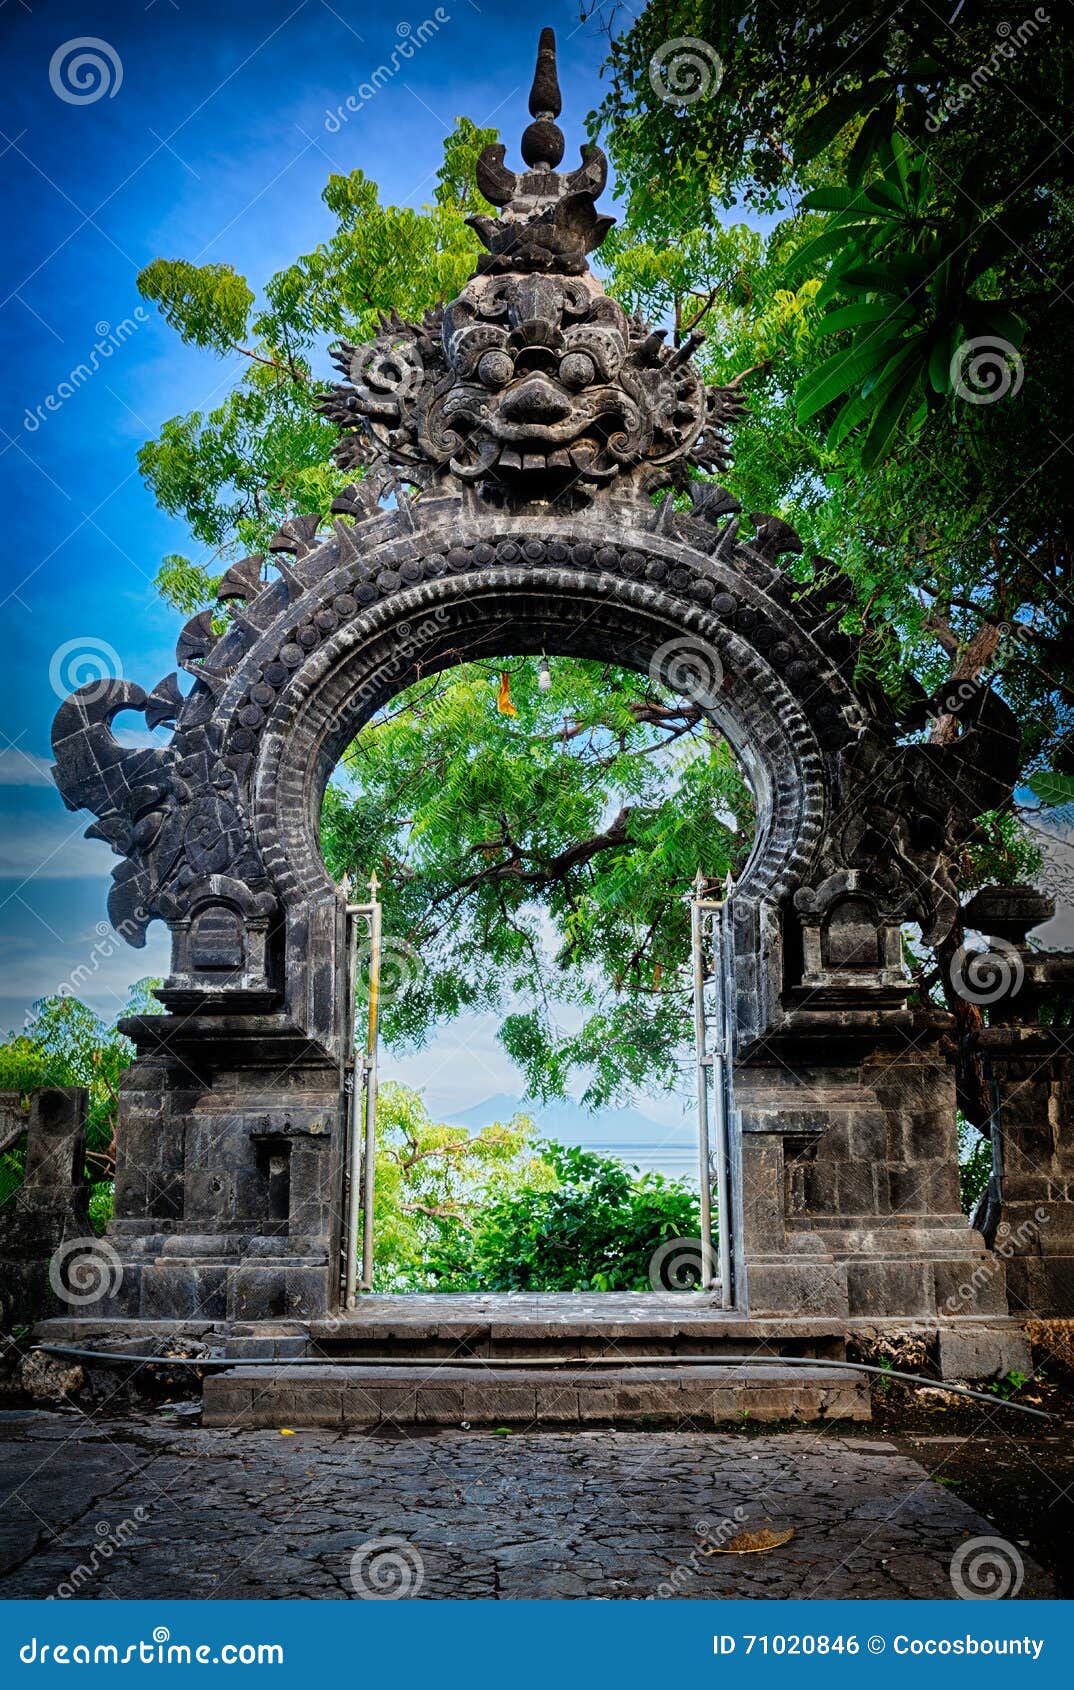 gardian statue gate at entrance bali temple